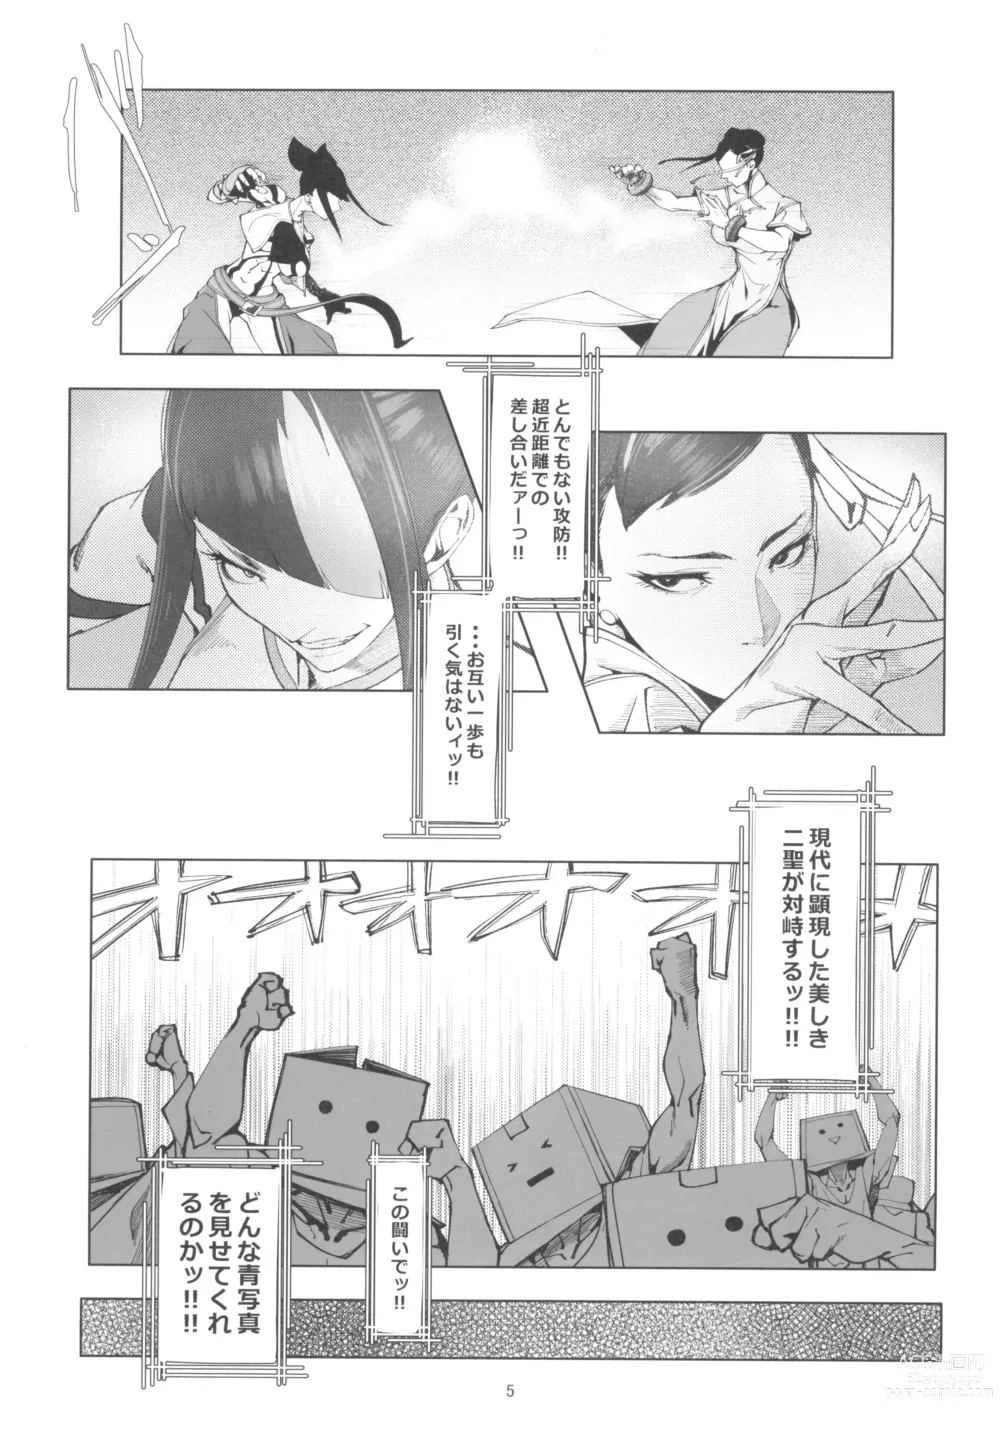 Page 5 of doujinshi Backstab